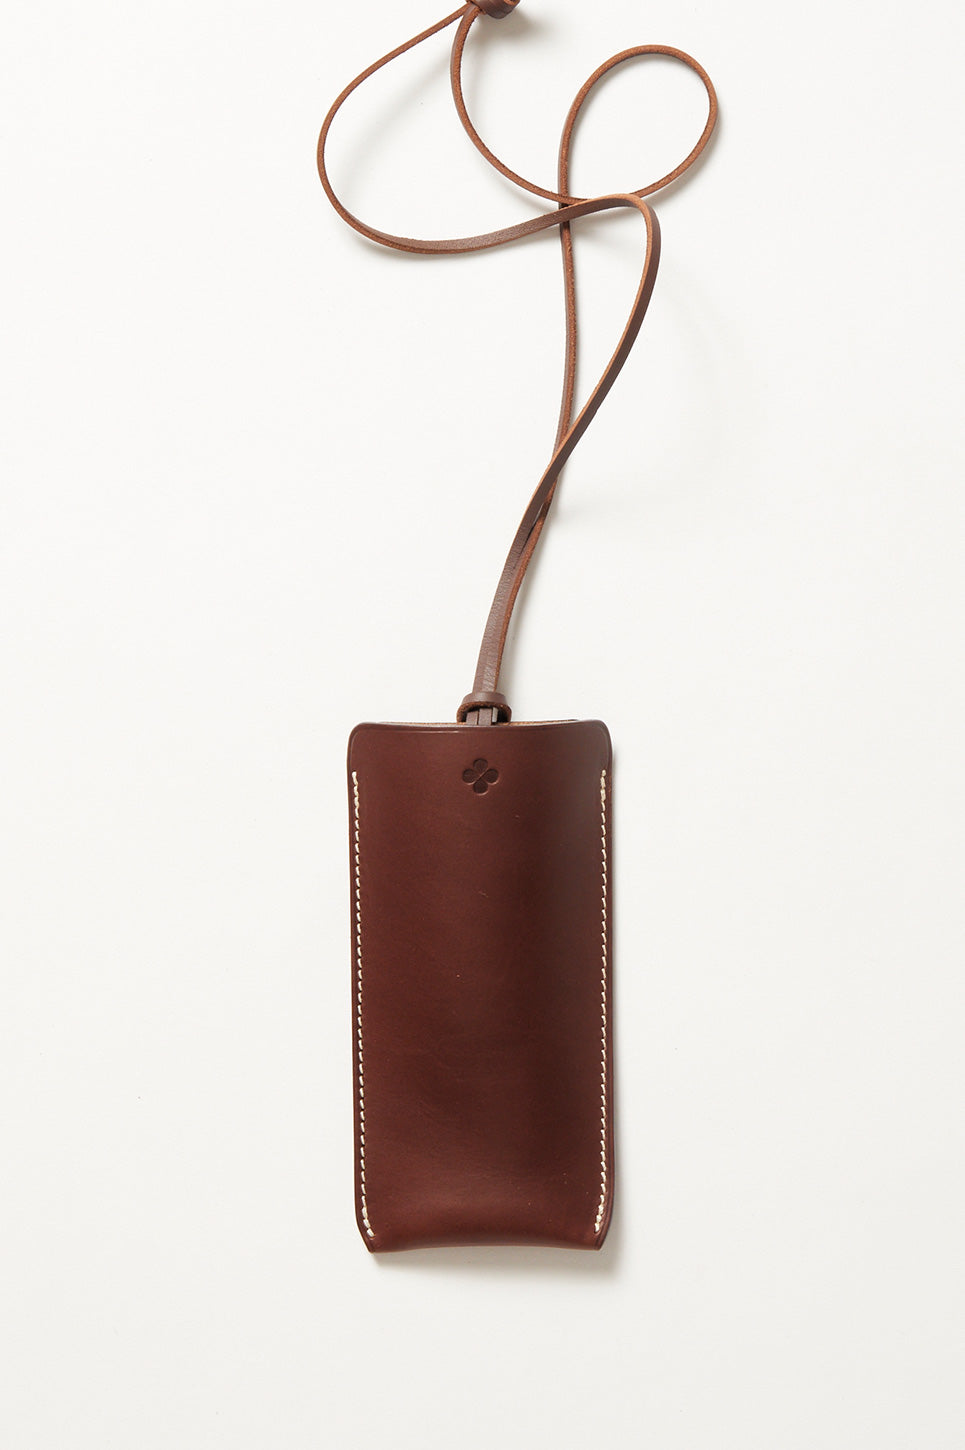 lunette case with brown leather shoulder strap